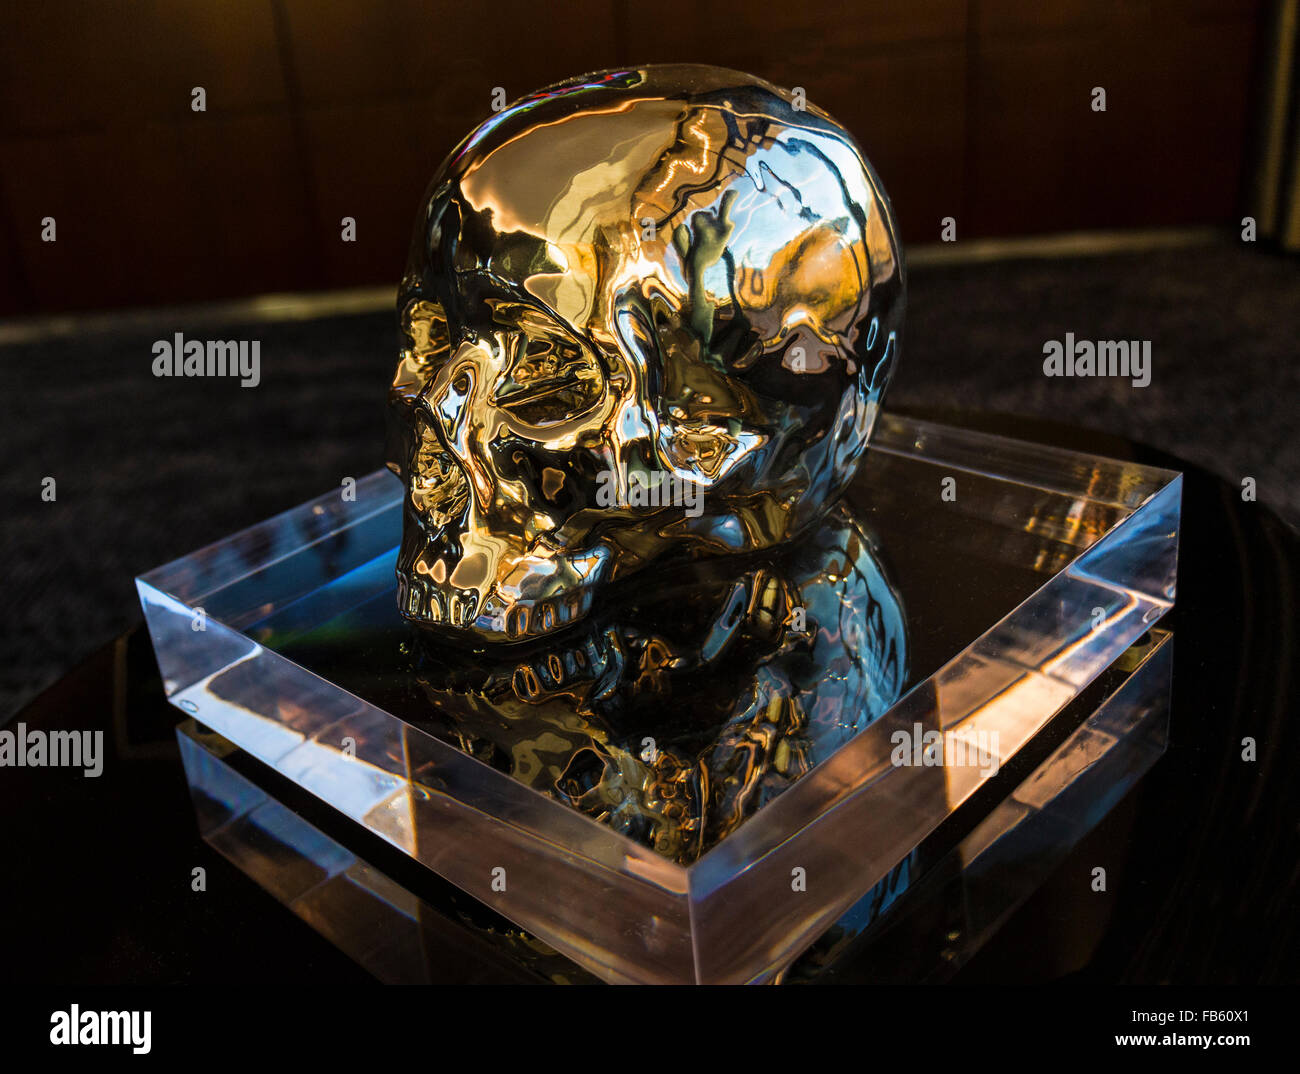 Skull glass sculpture. Stock Photo